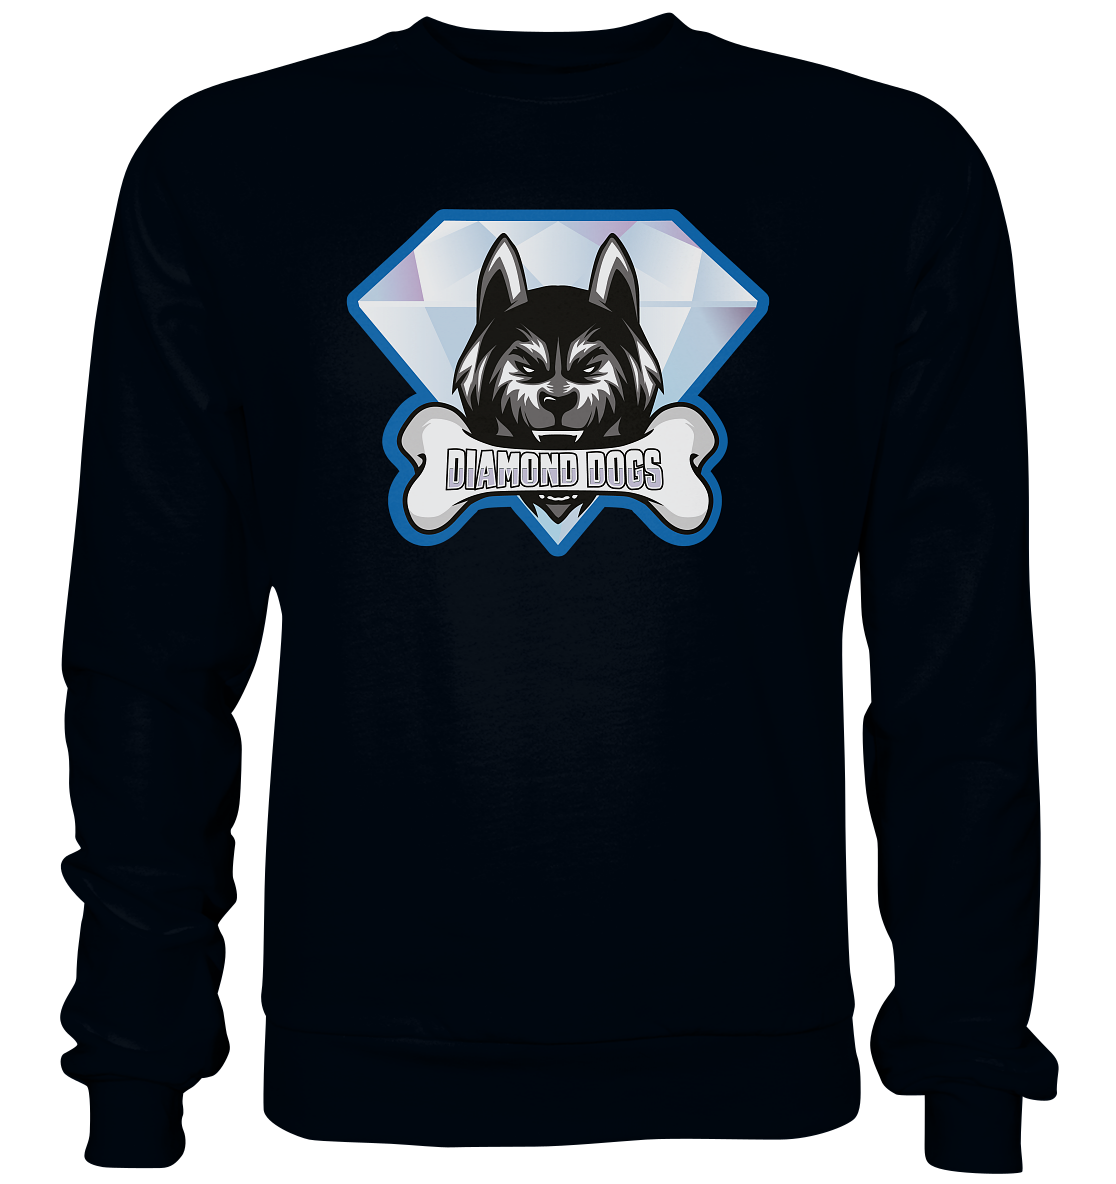 DIAMOND DOGS - Basic Sweatshirt